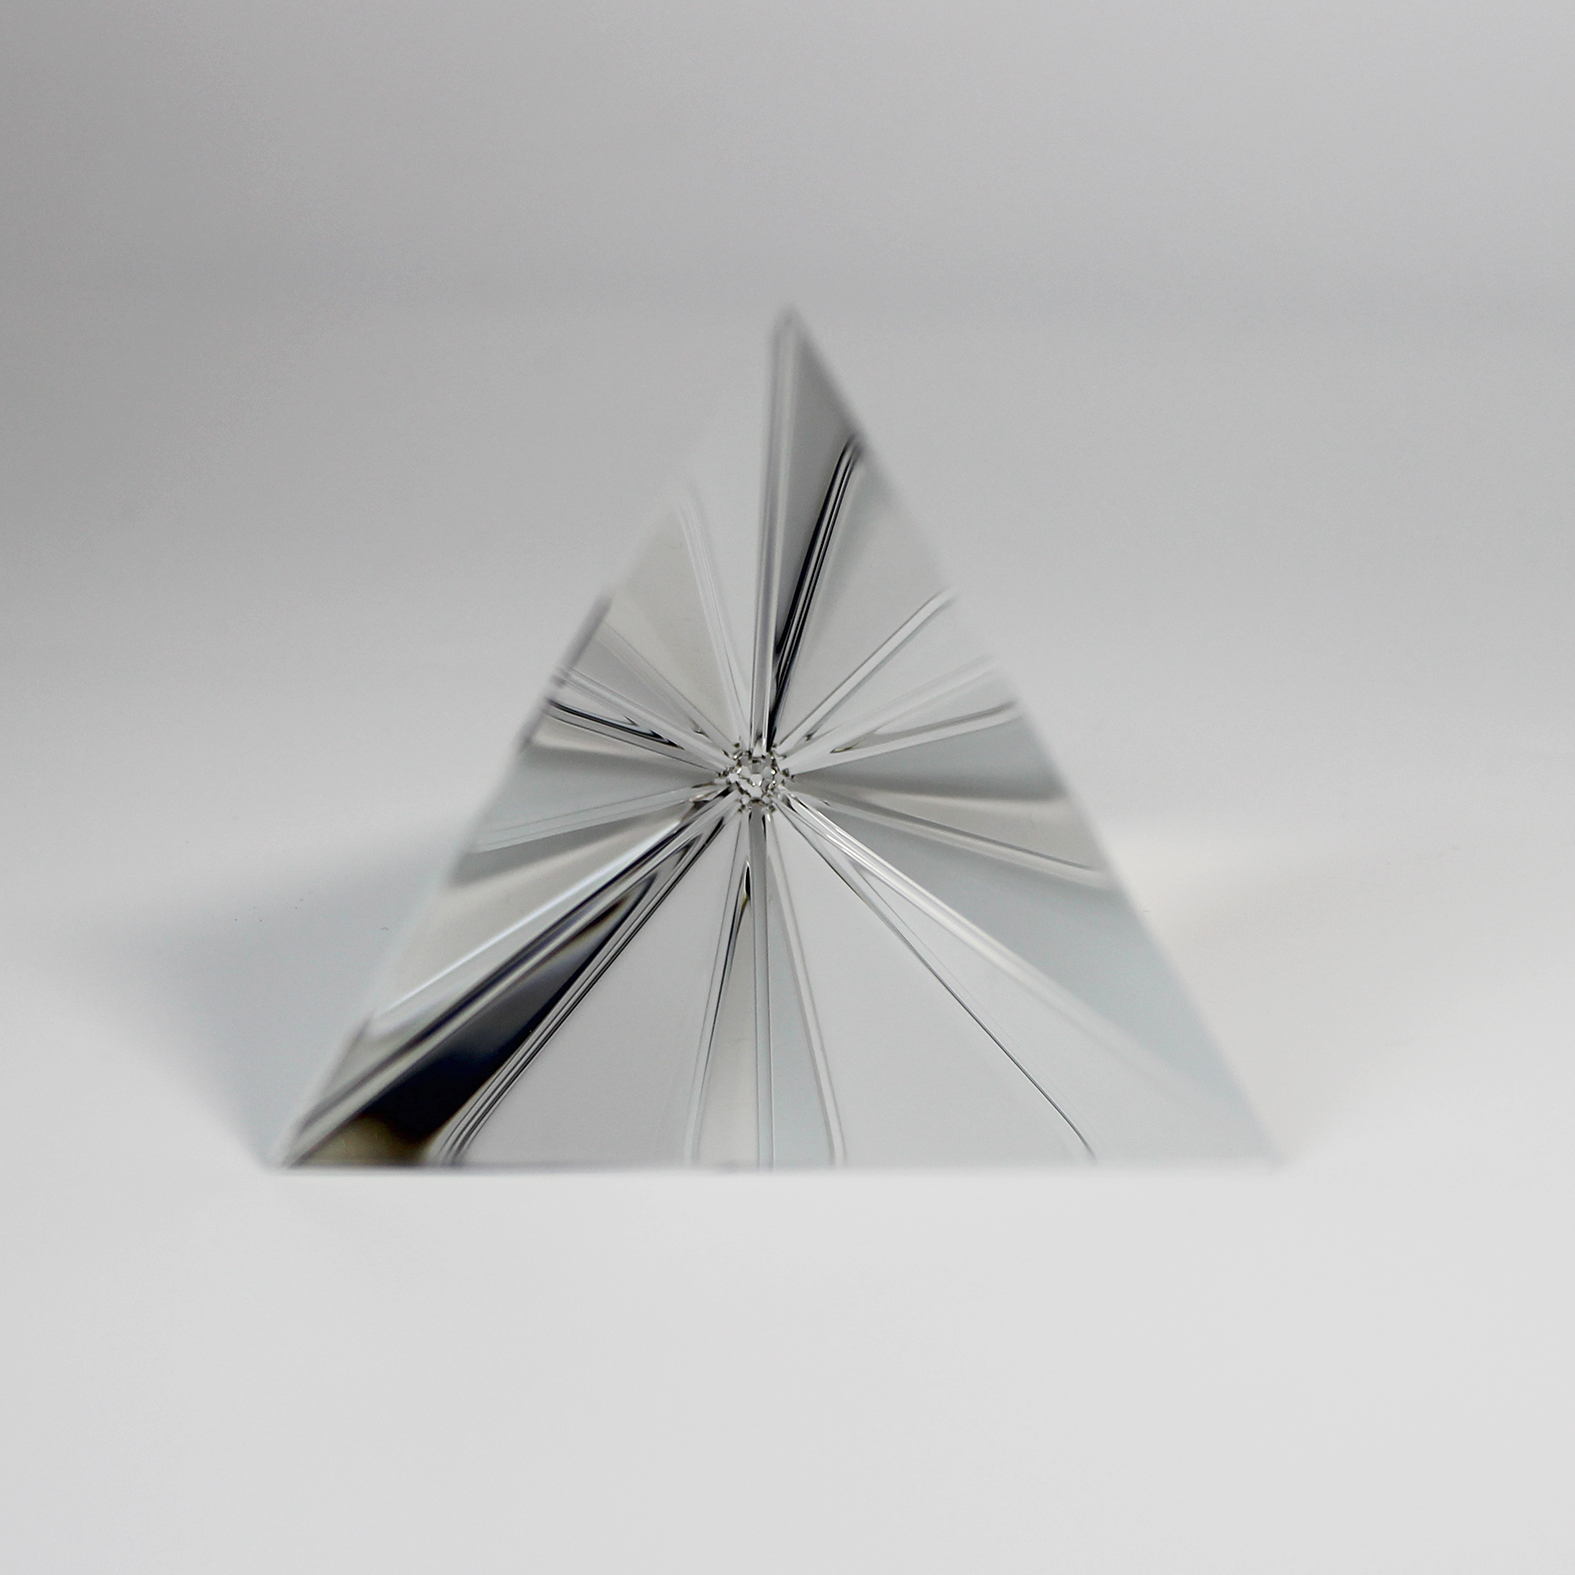 China Factory Diret Selling Optical Glass K9 Triangular Pyramid Prism